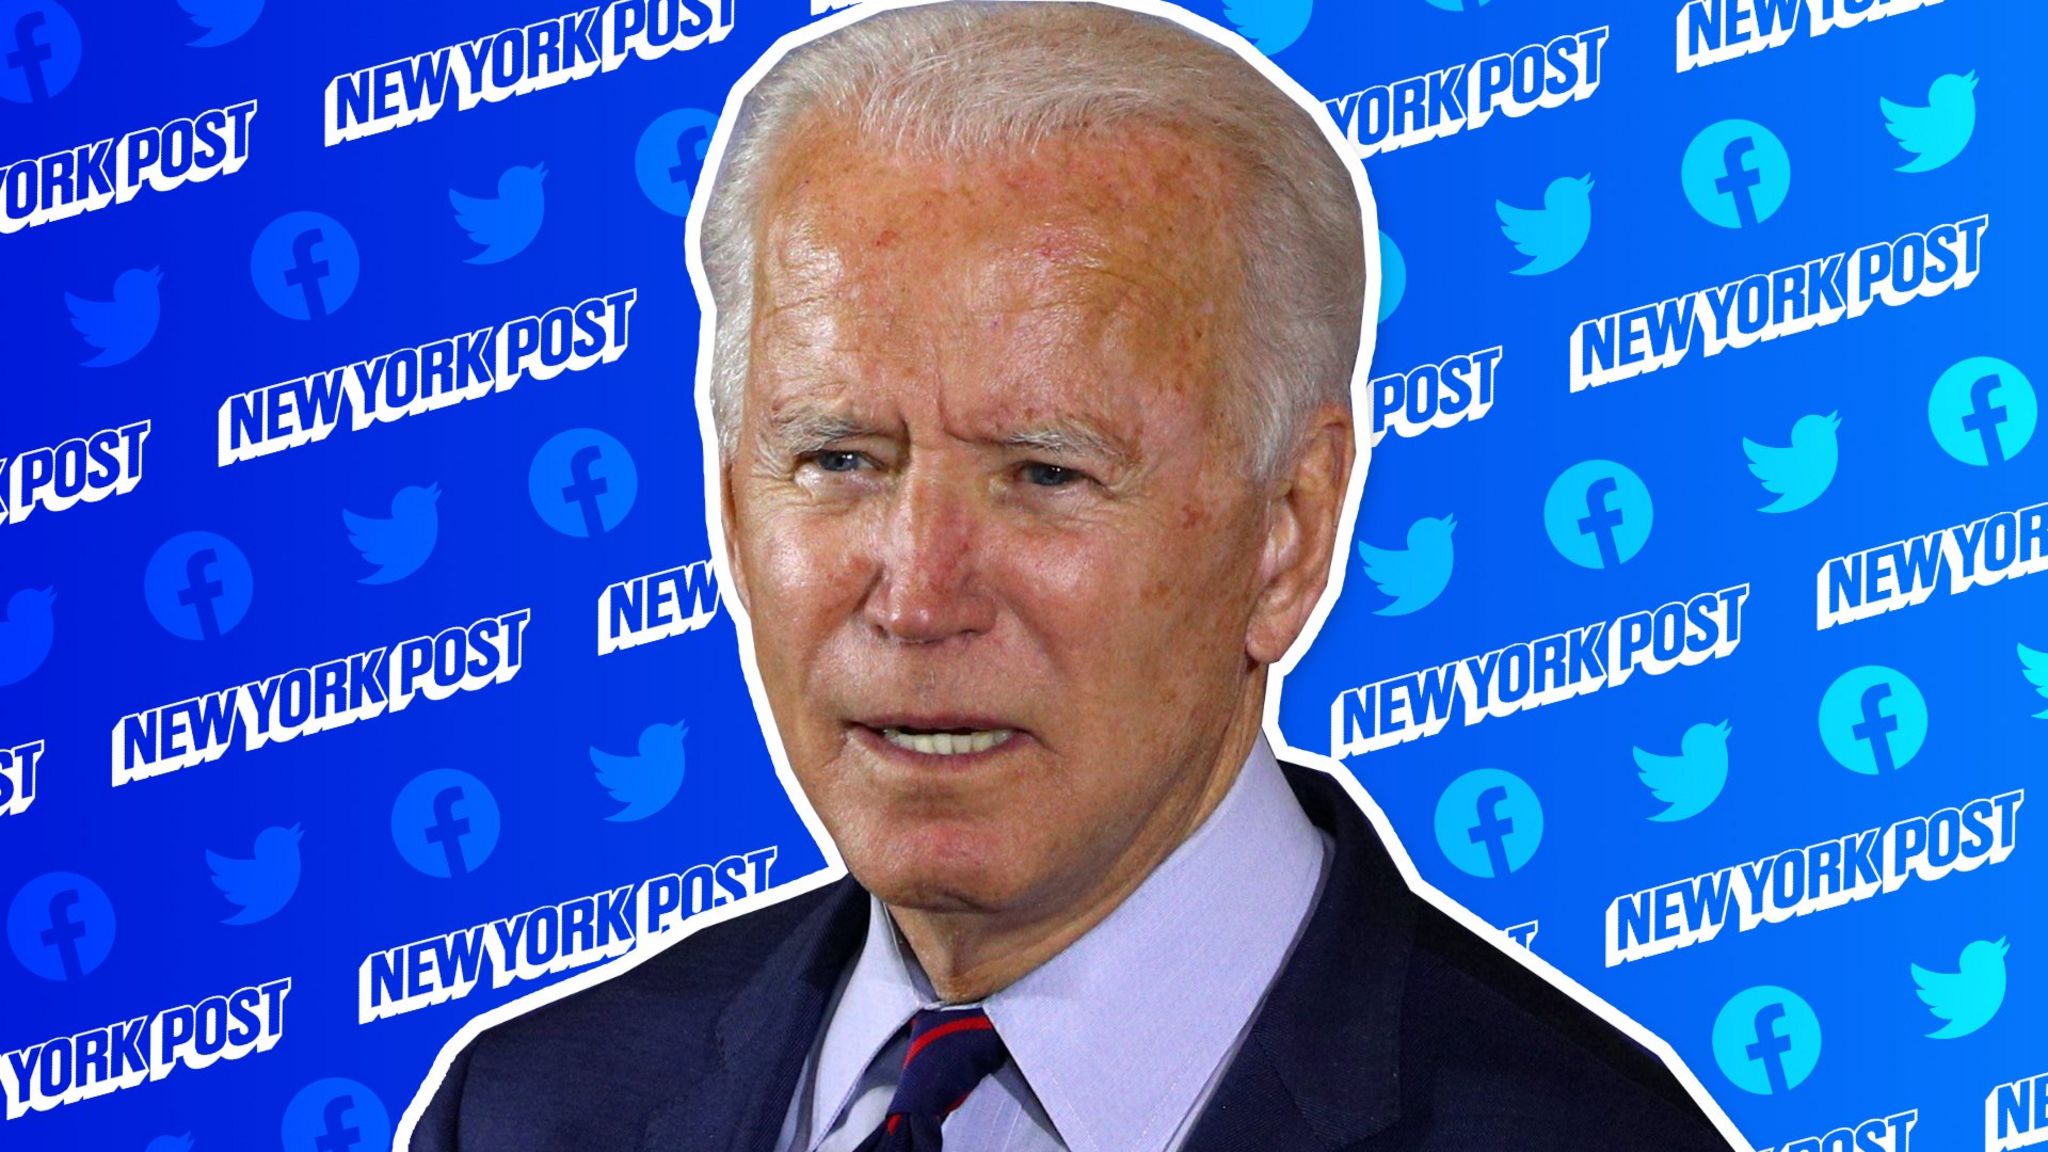 Joe Biden and the New York Post logo